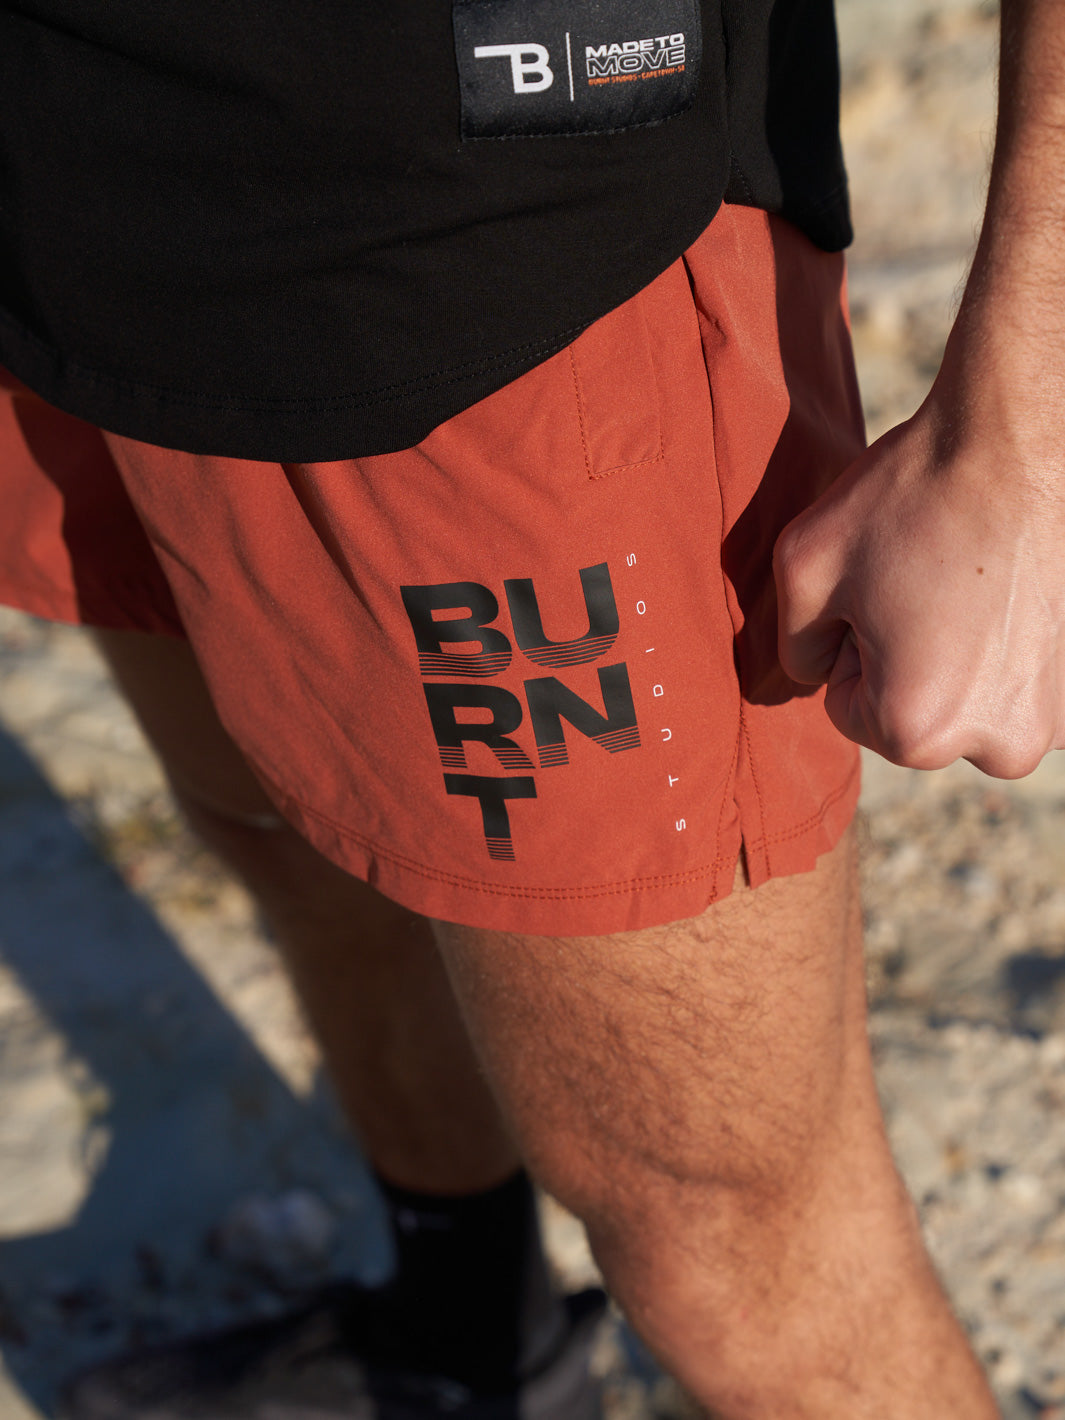 Burnt Studios Activewear 5-inch shorts in core rust social